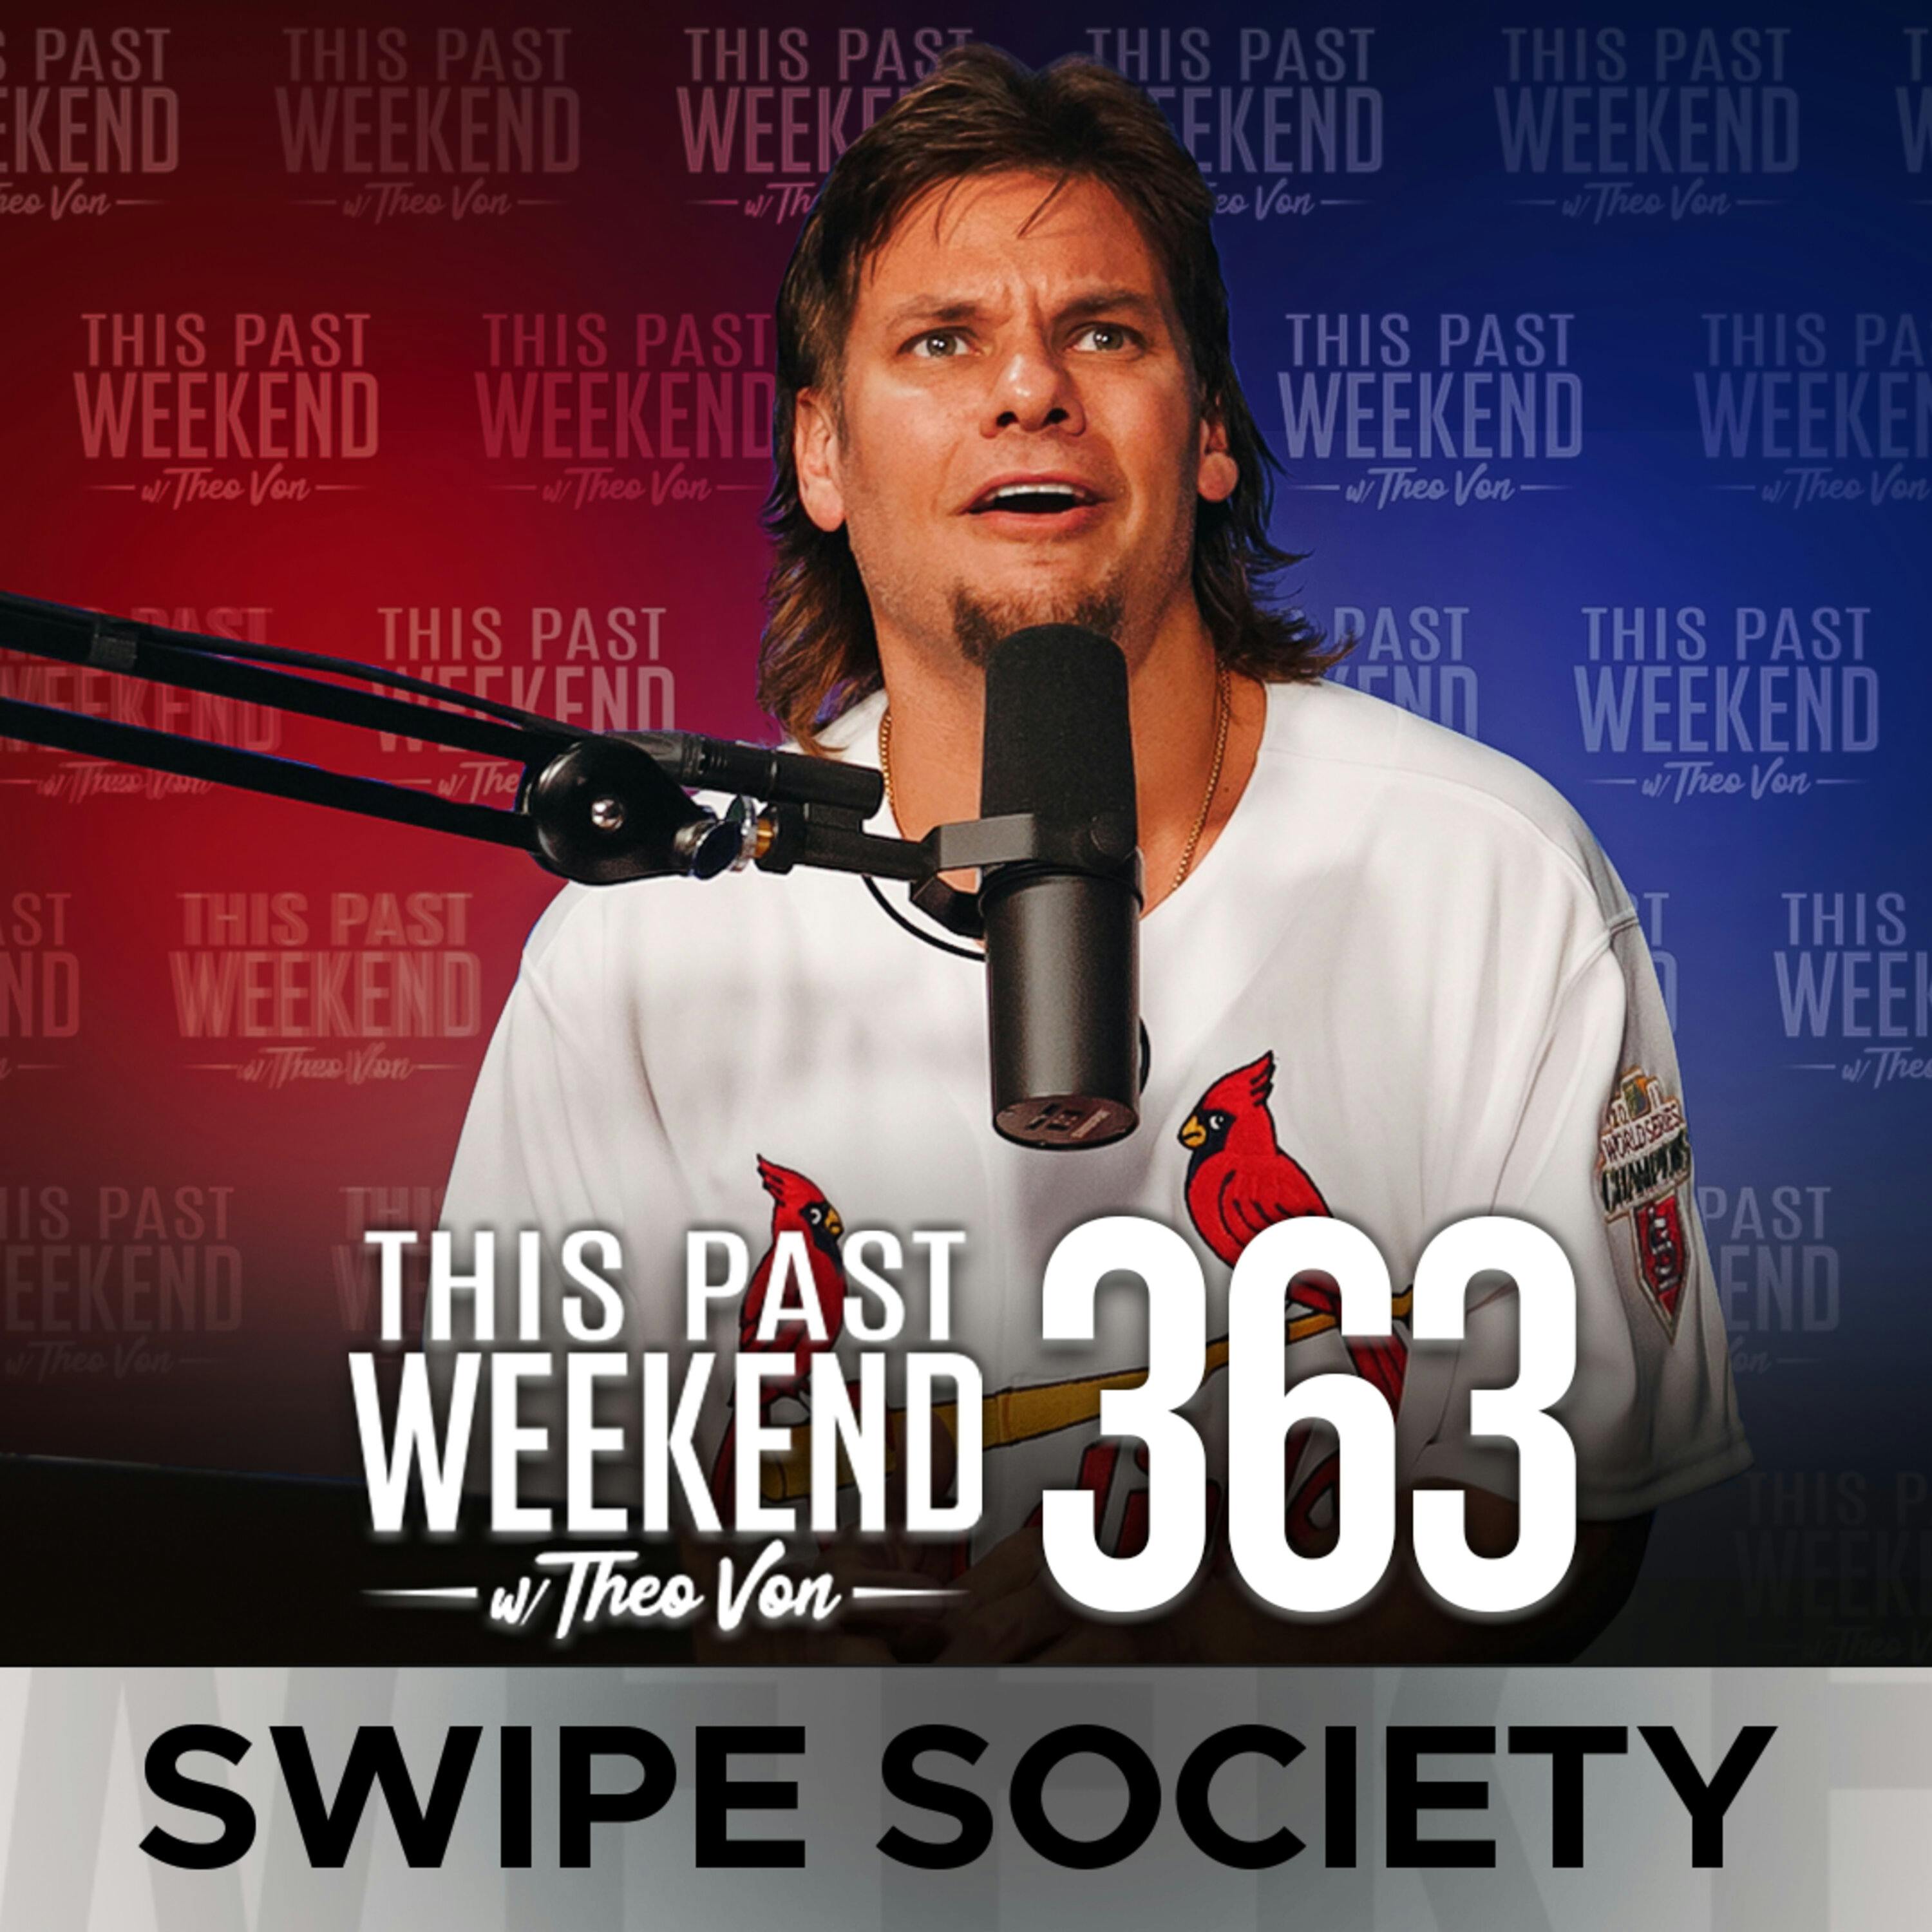 E363 Swipe Society by Theo Von